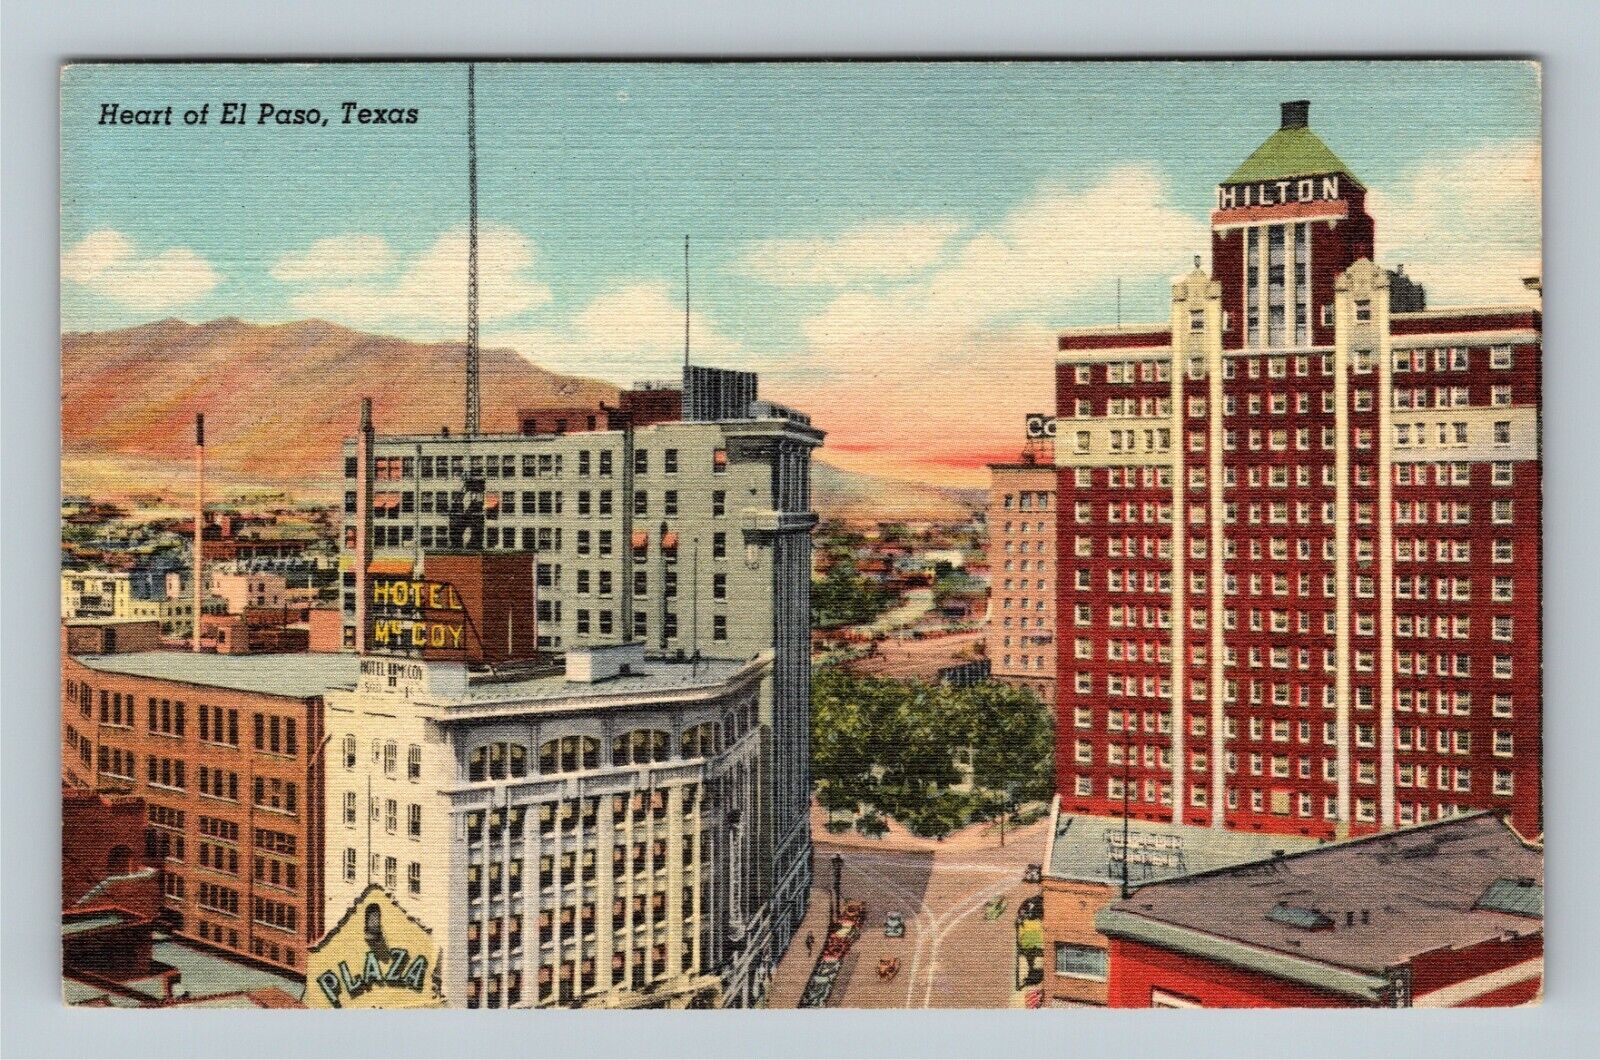 View City, Hotel McCoy, Plaza, Hilton, El Paso Texas Vintage Postcard